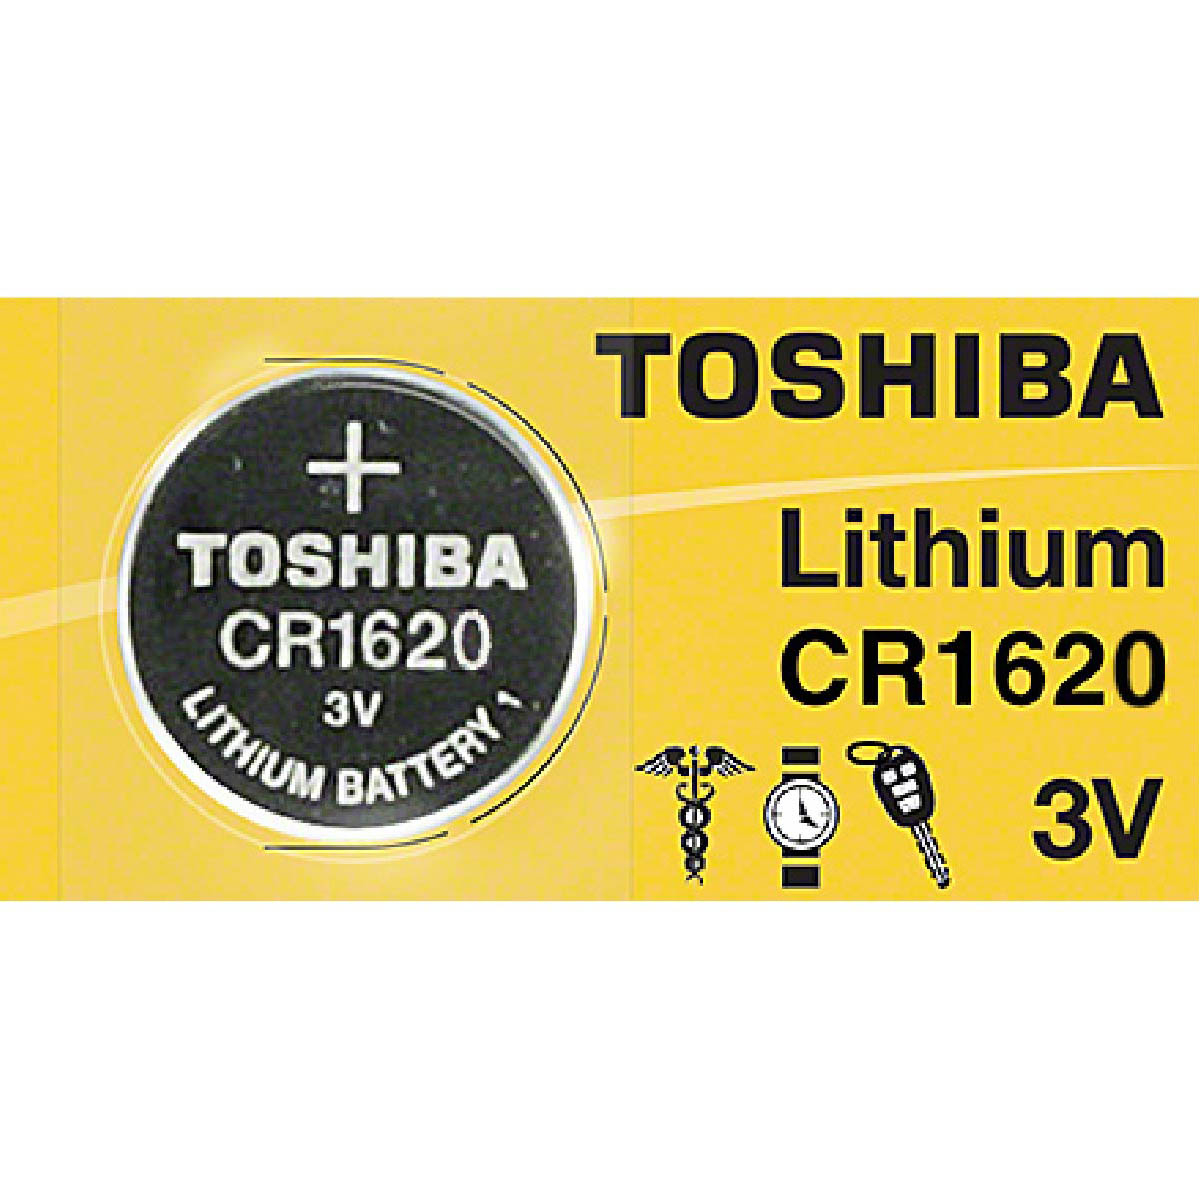 Toshiba CR1620 Battery 3V Lithium Coin Cell (1PC)